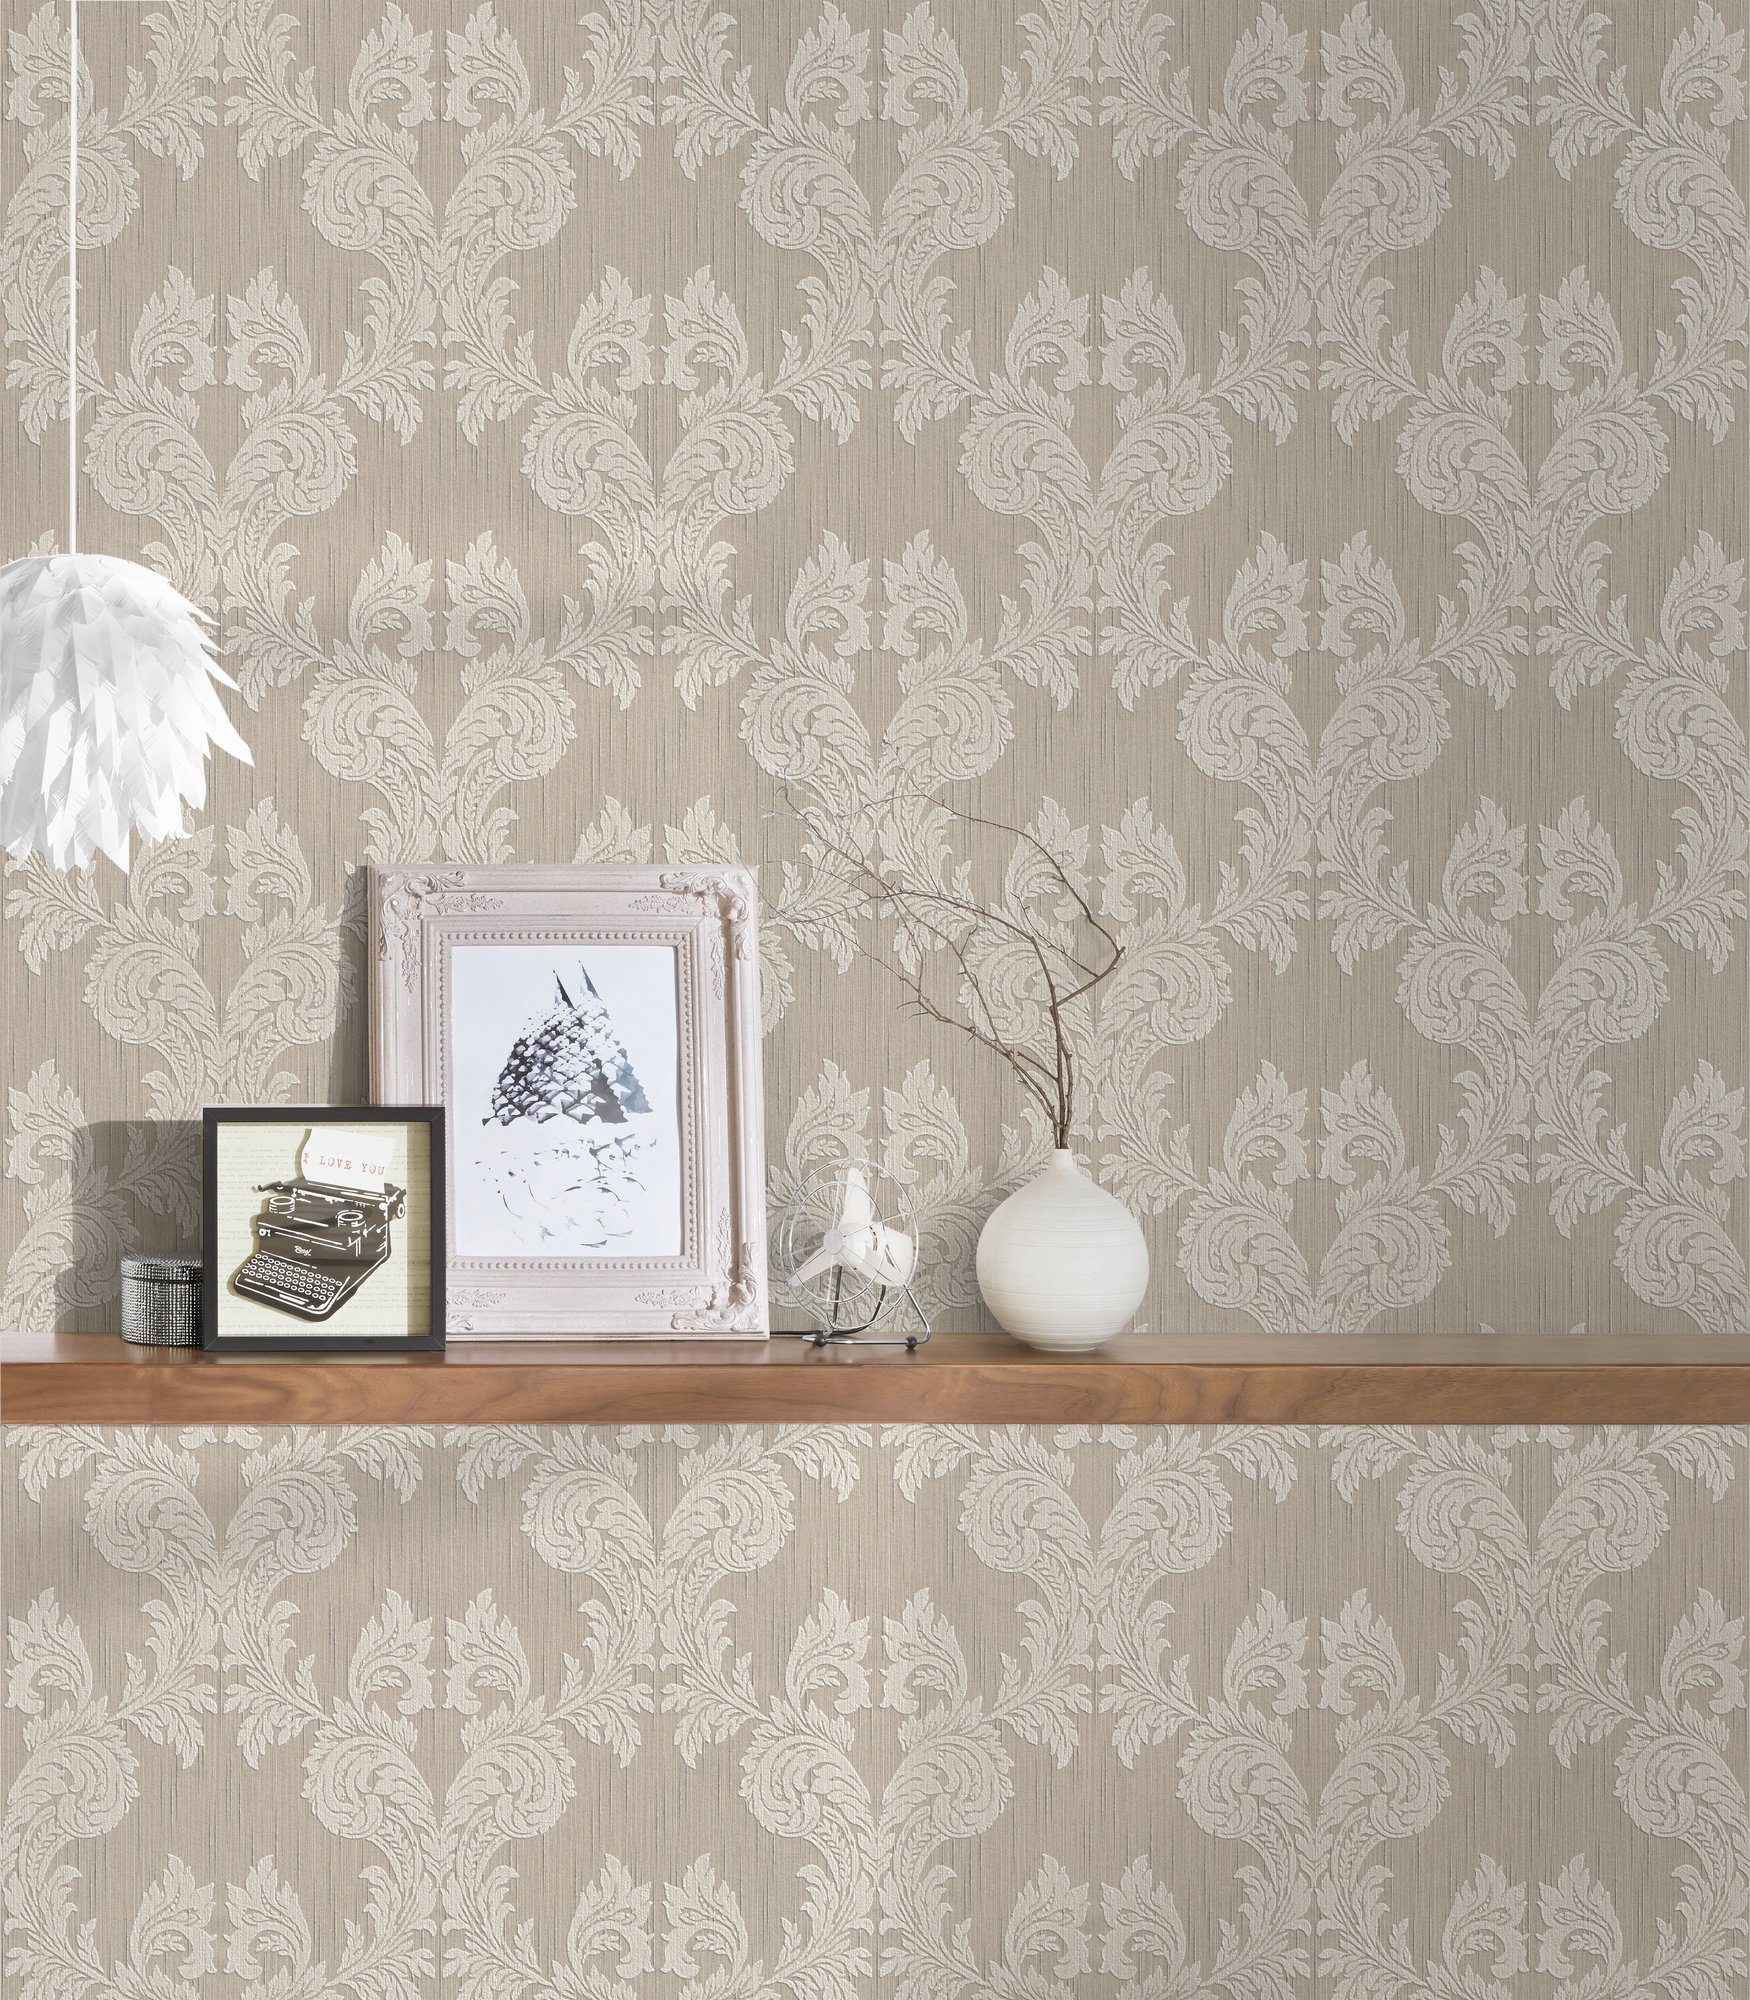 Tapete samtig, beige Barock Barock, Création Architects A.S. floral, Paper Tessuto, Textiltapete